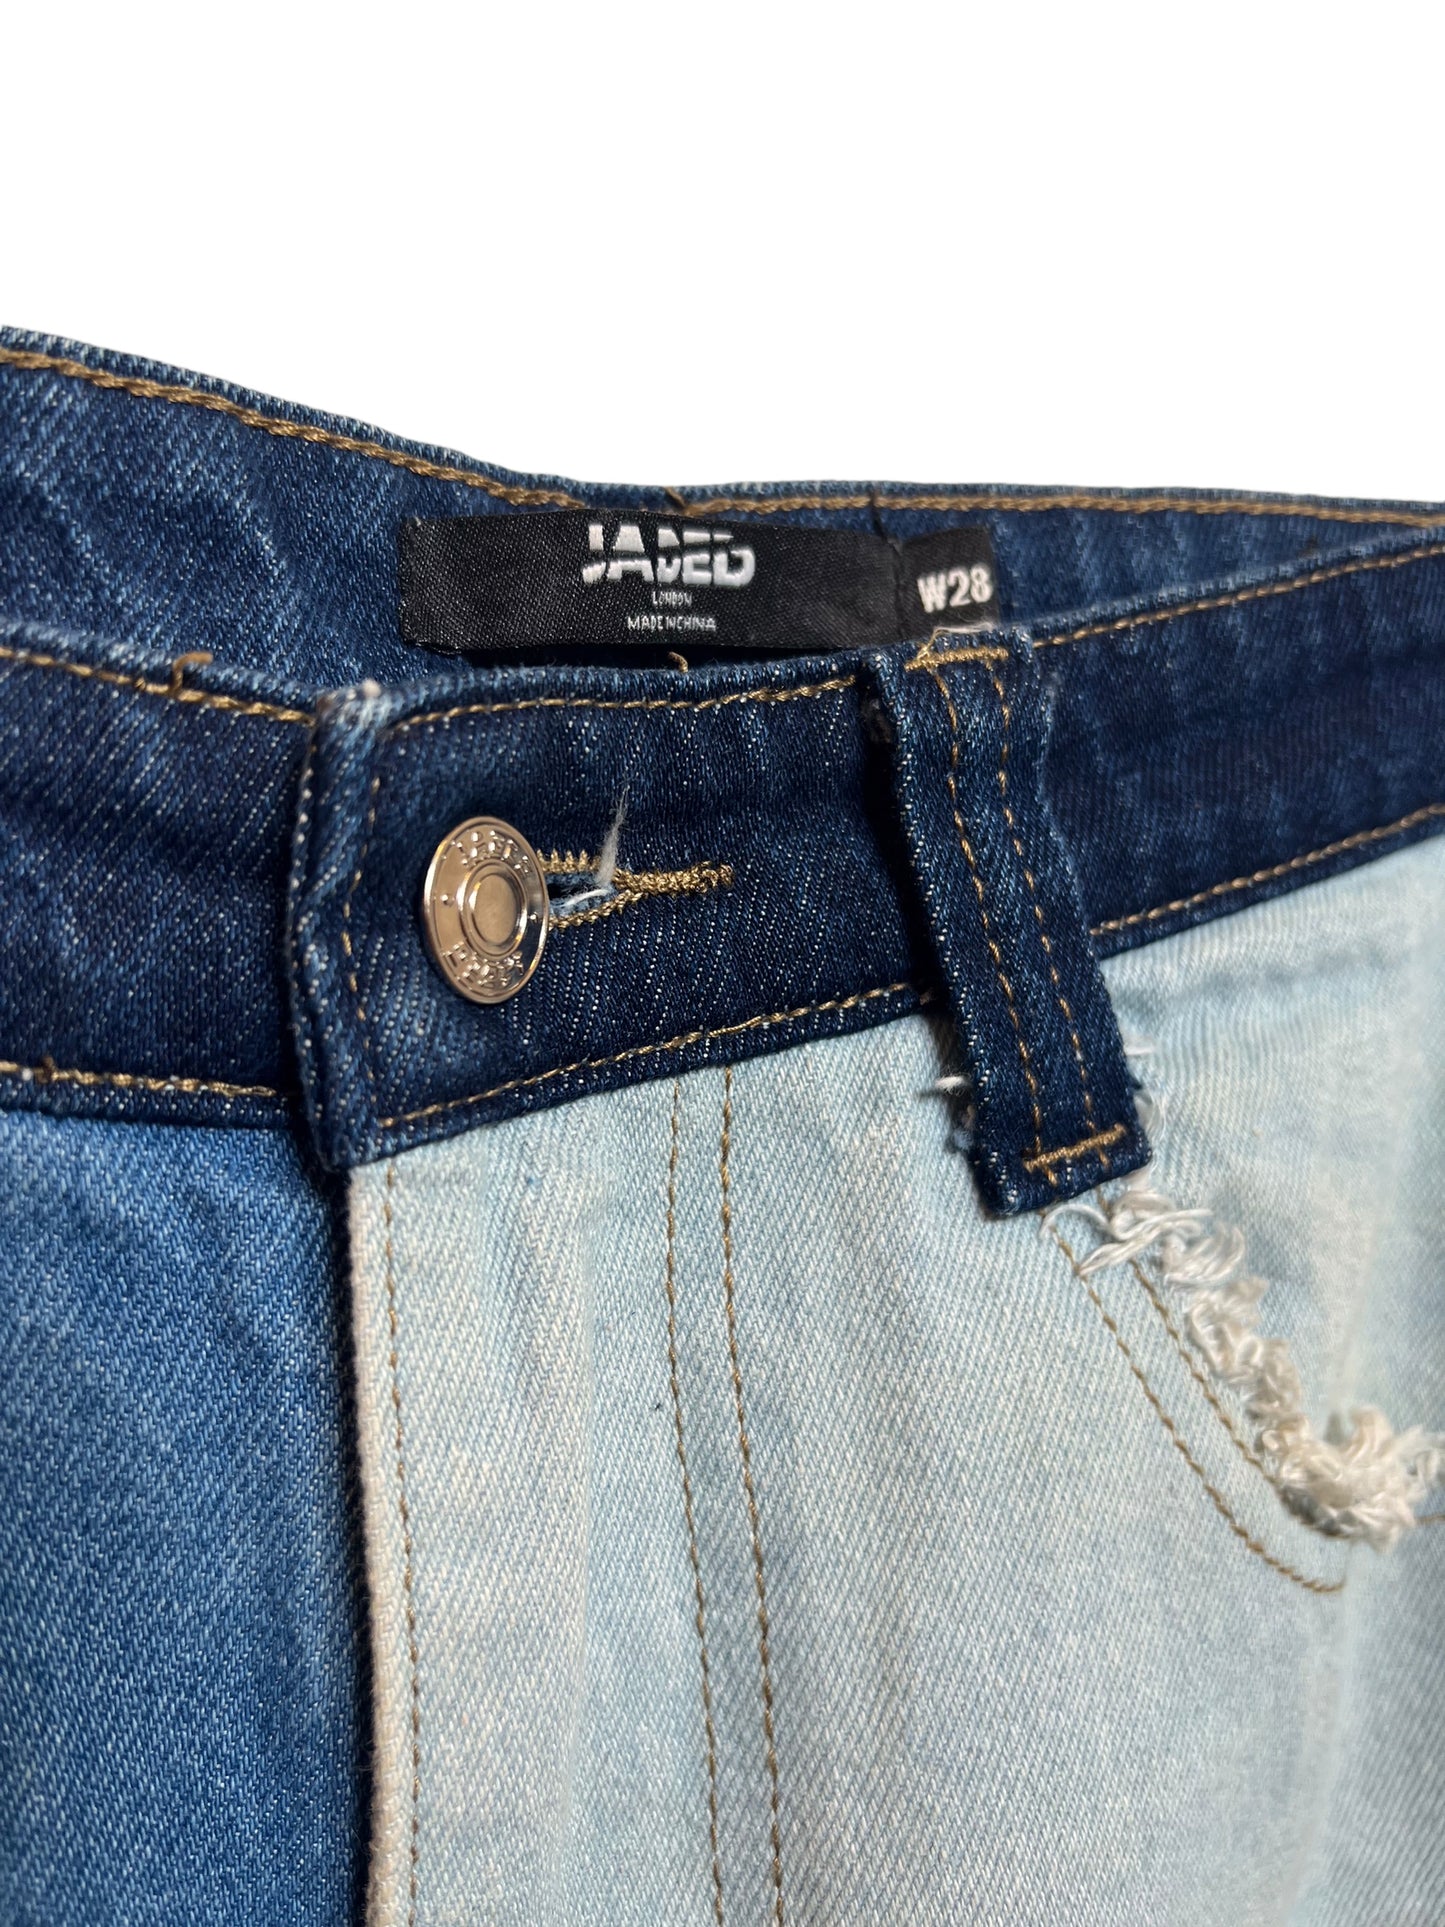 Jaded London Patchwork Jeans (Size W29)